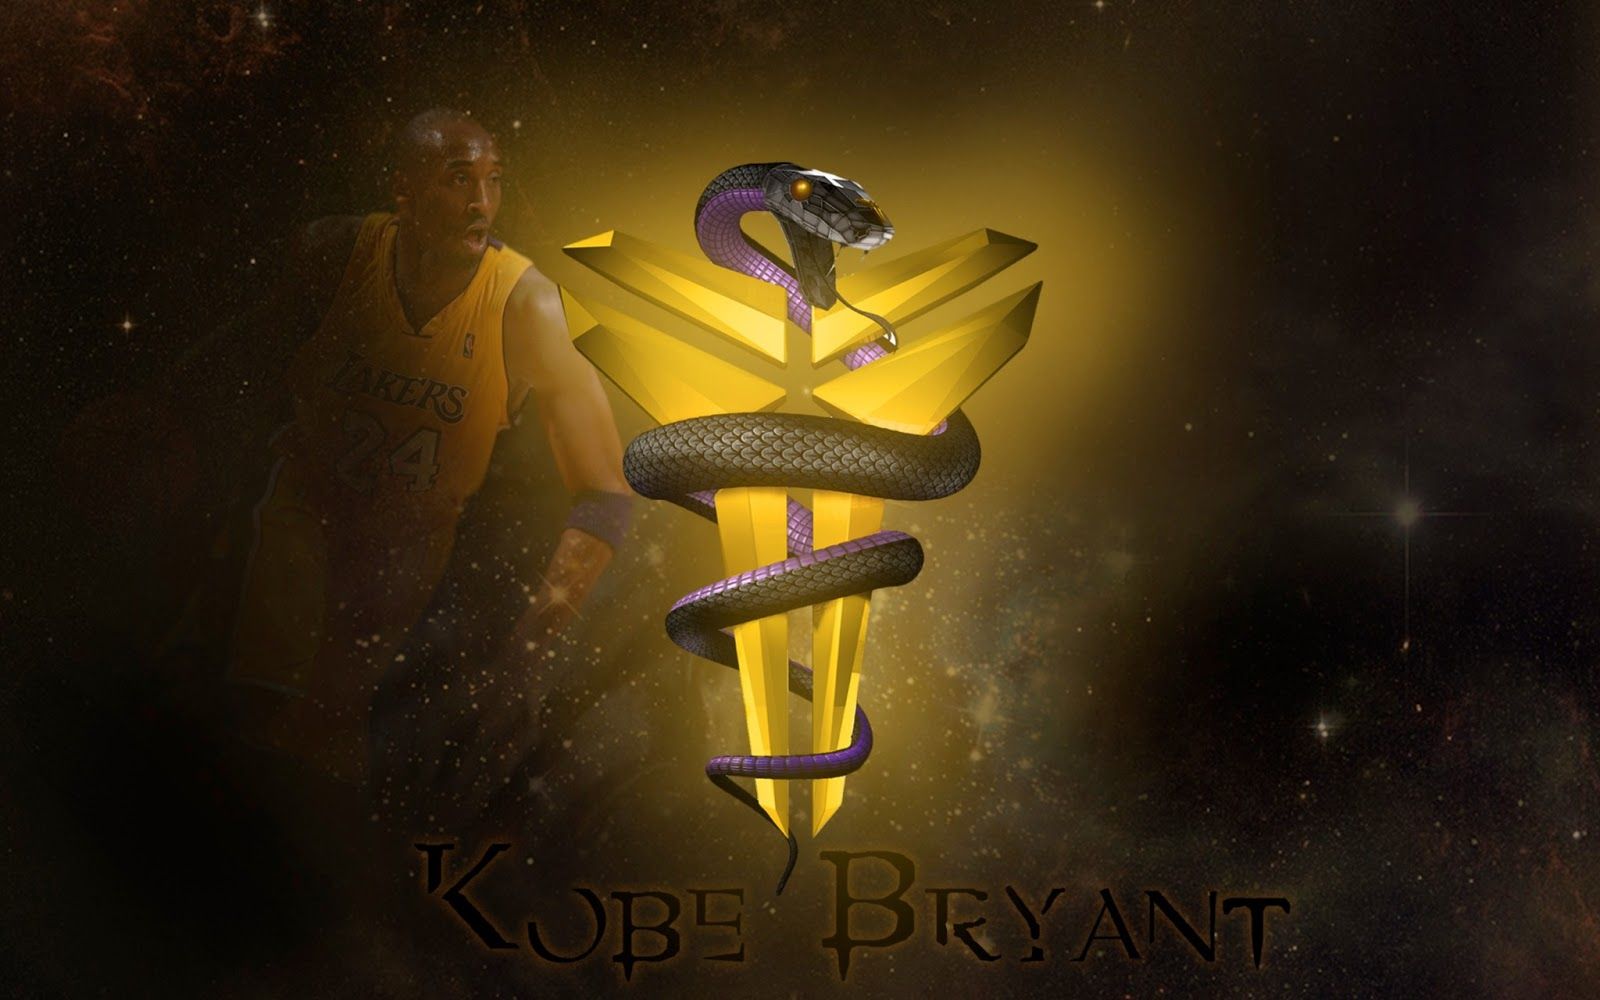 Kobe bryant logo 4 HD Wallpaper Basketball Backgrounds